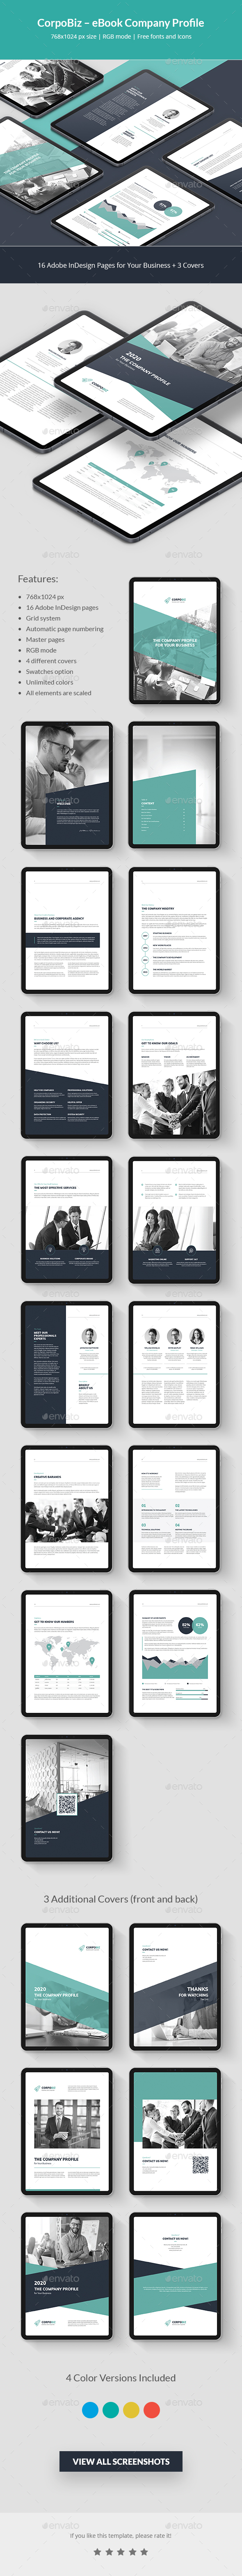 CorpoBiz – Business and Corporate eBook Company Profile